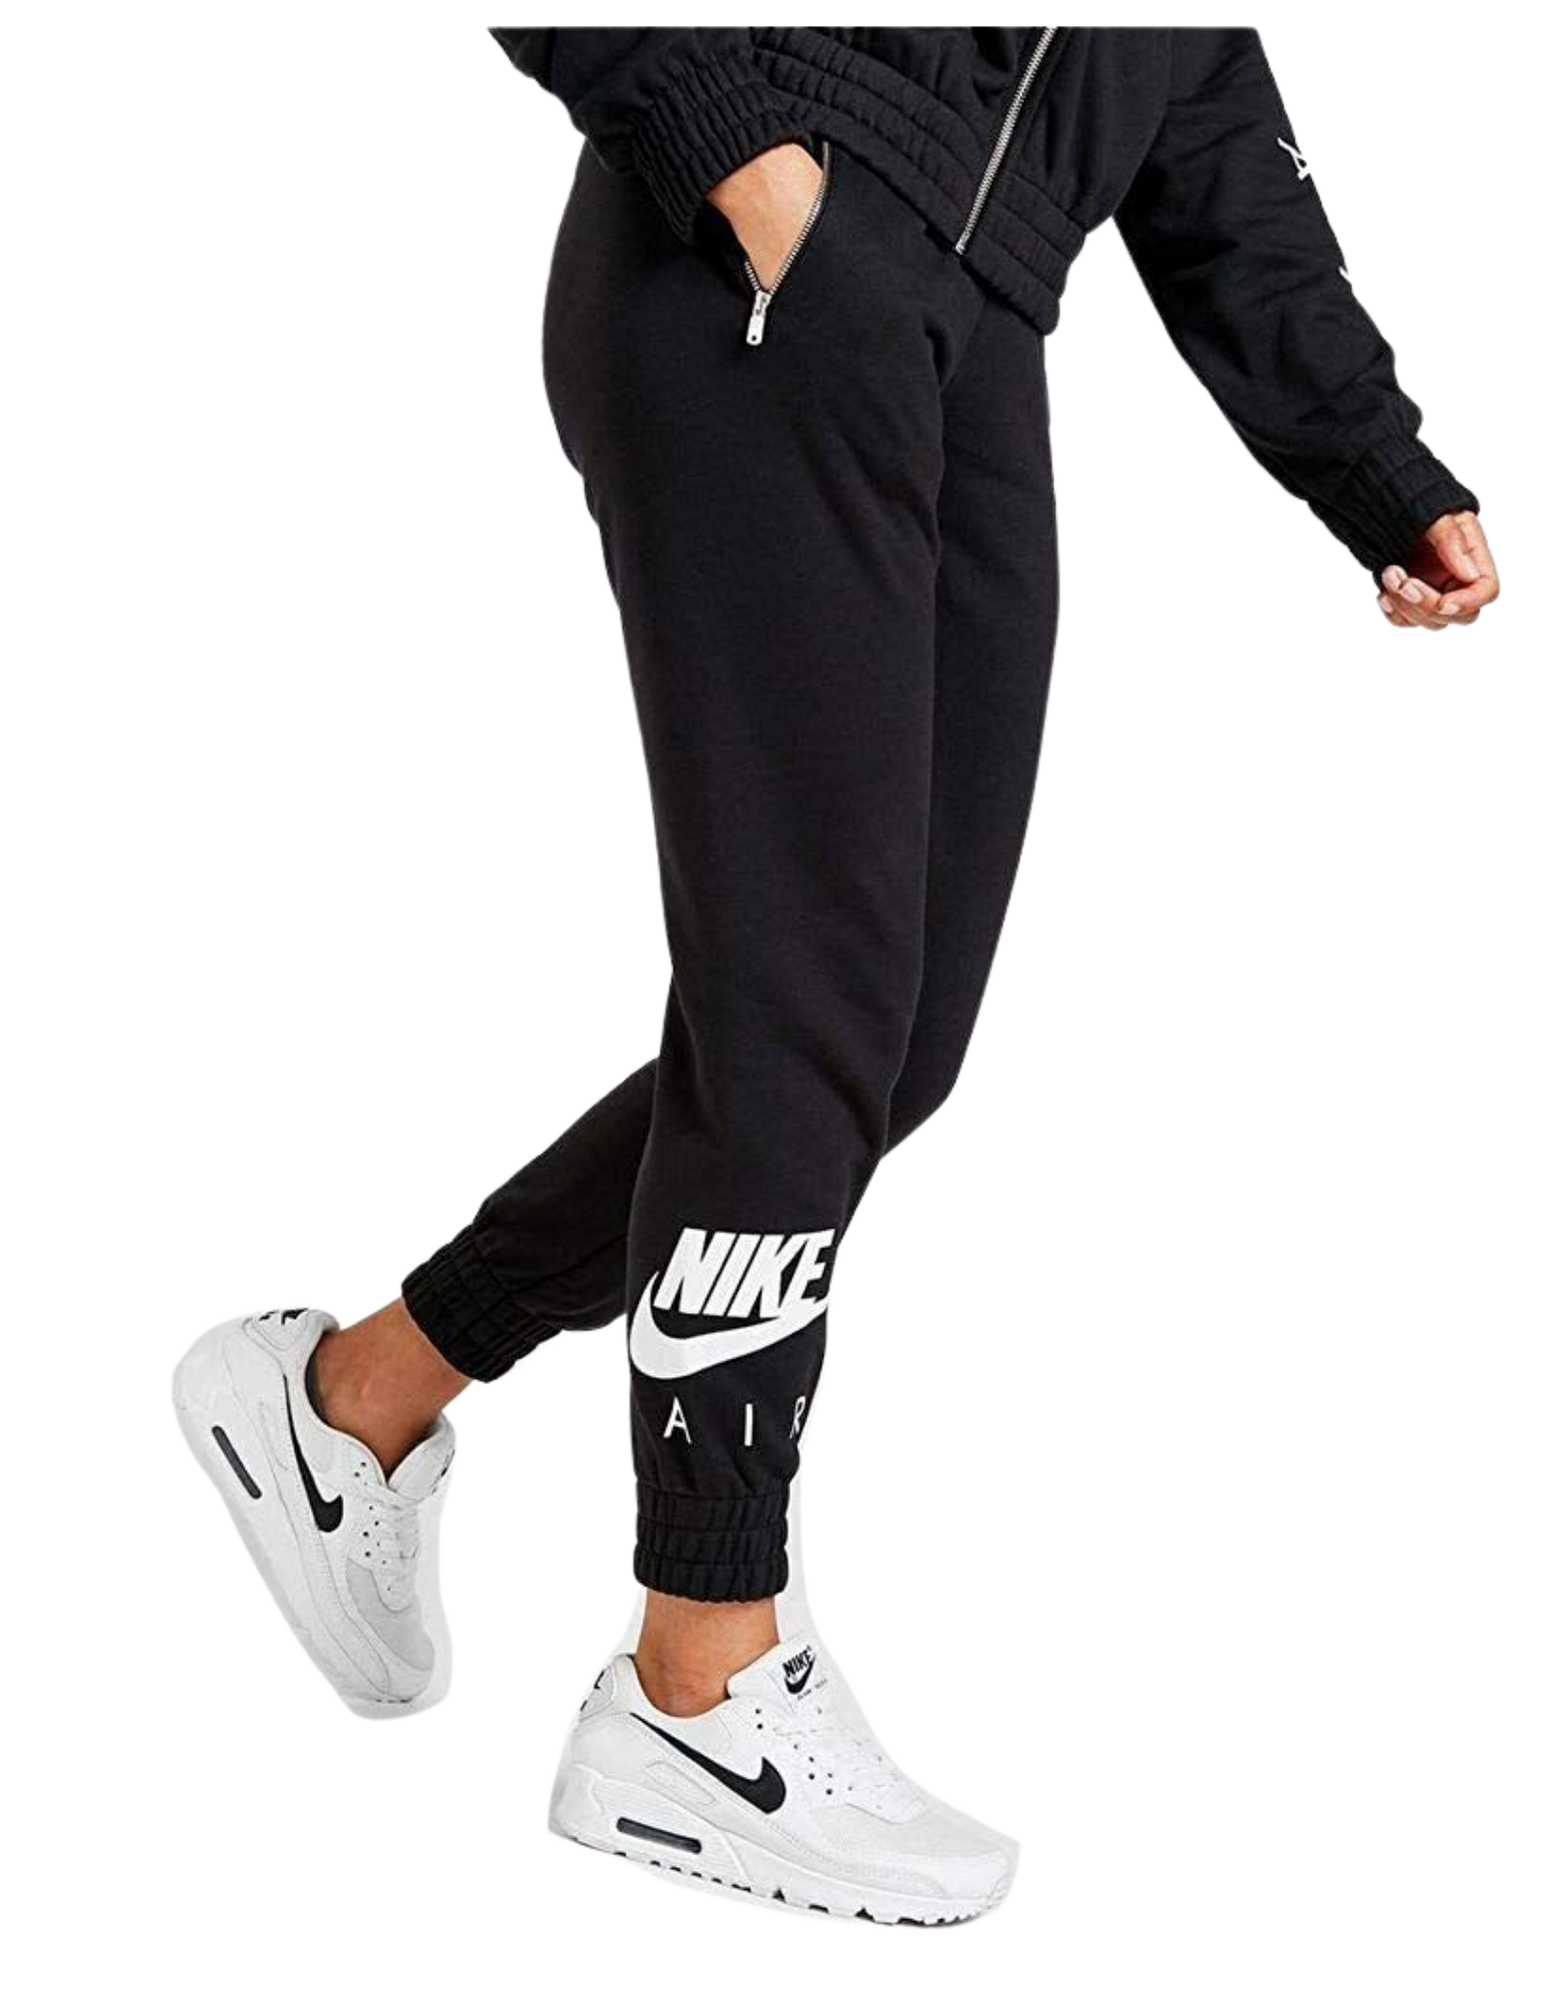 Nike, Air Fleece Jogging Pants Womens